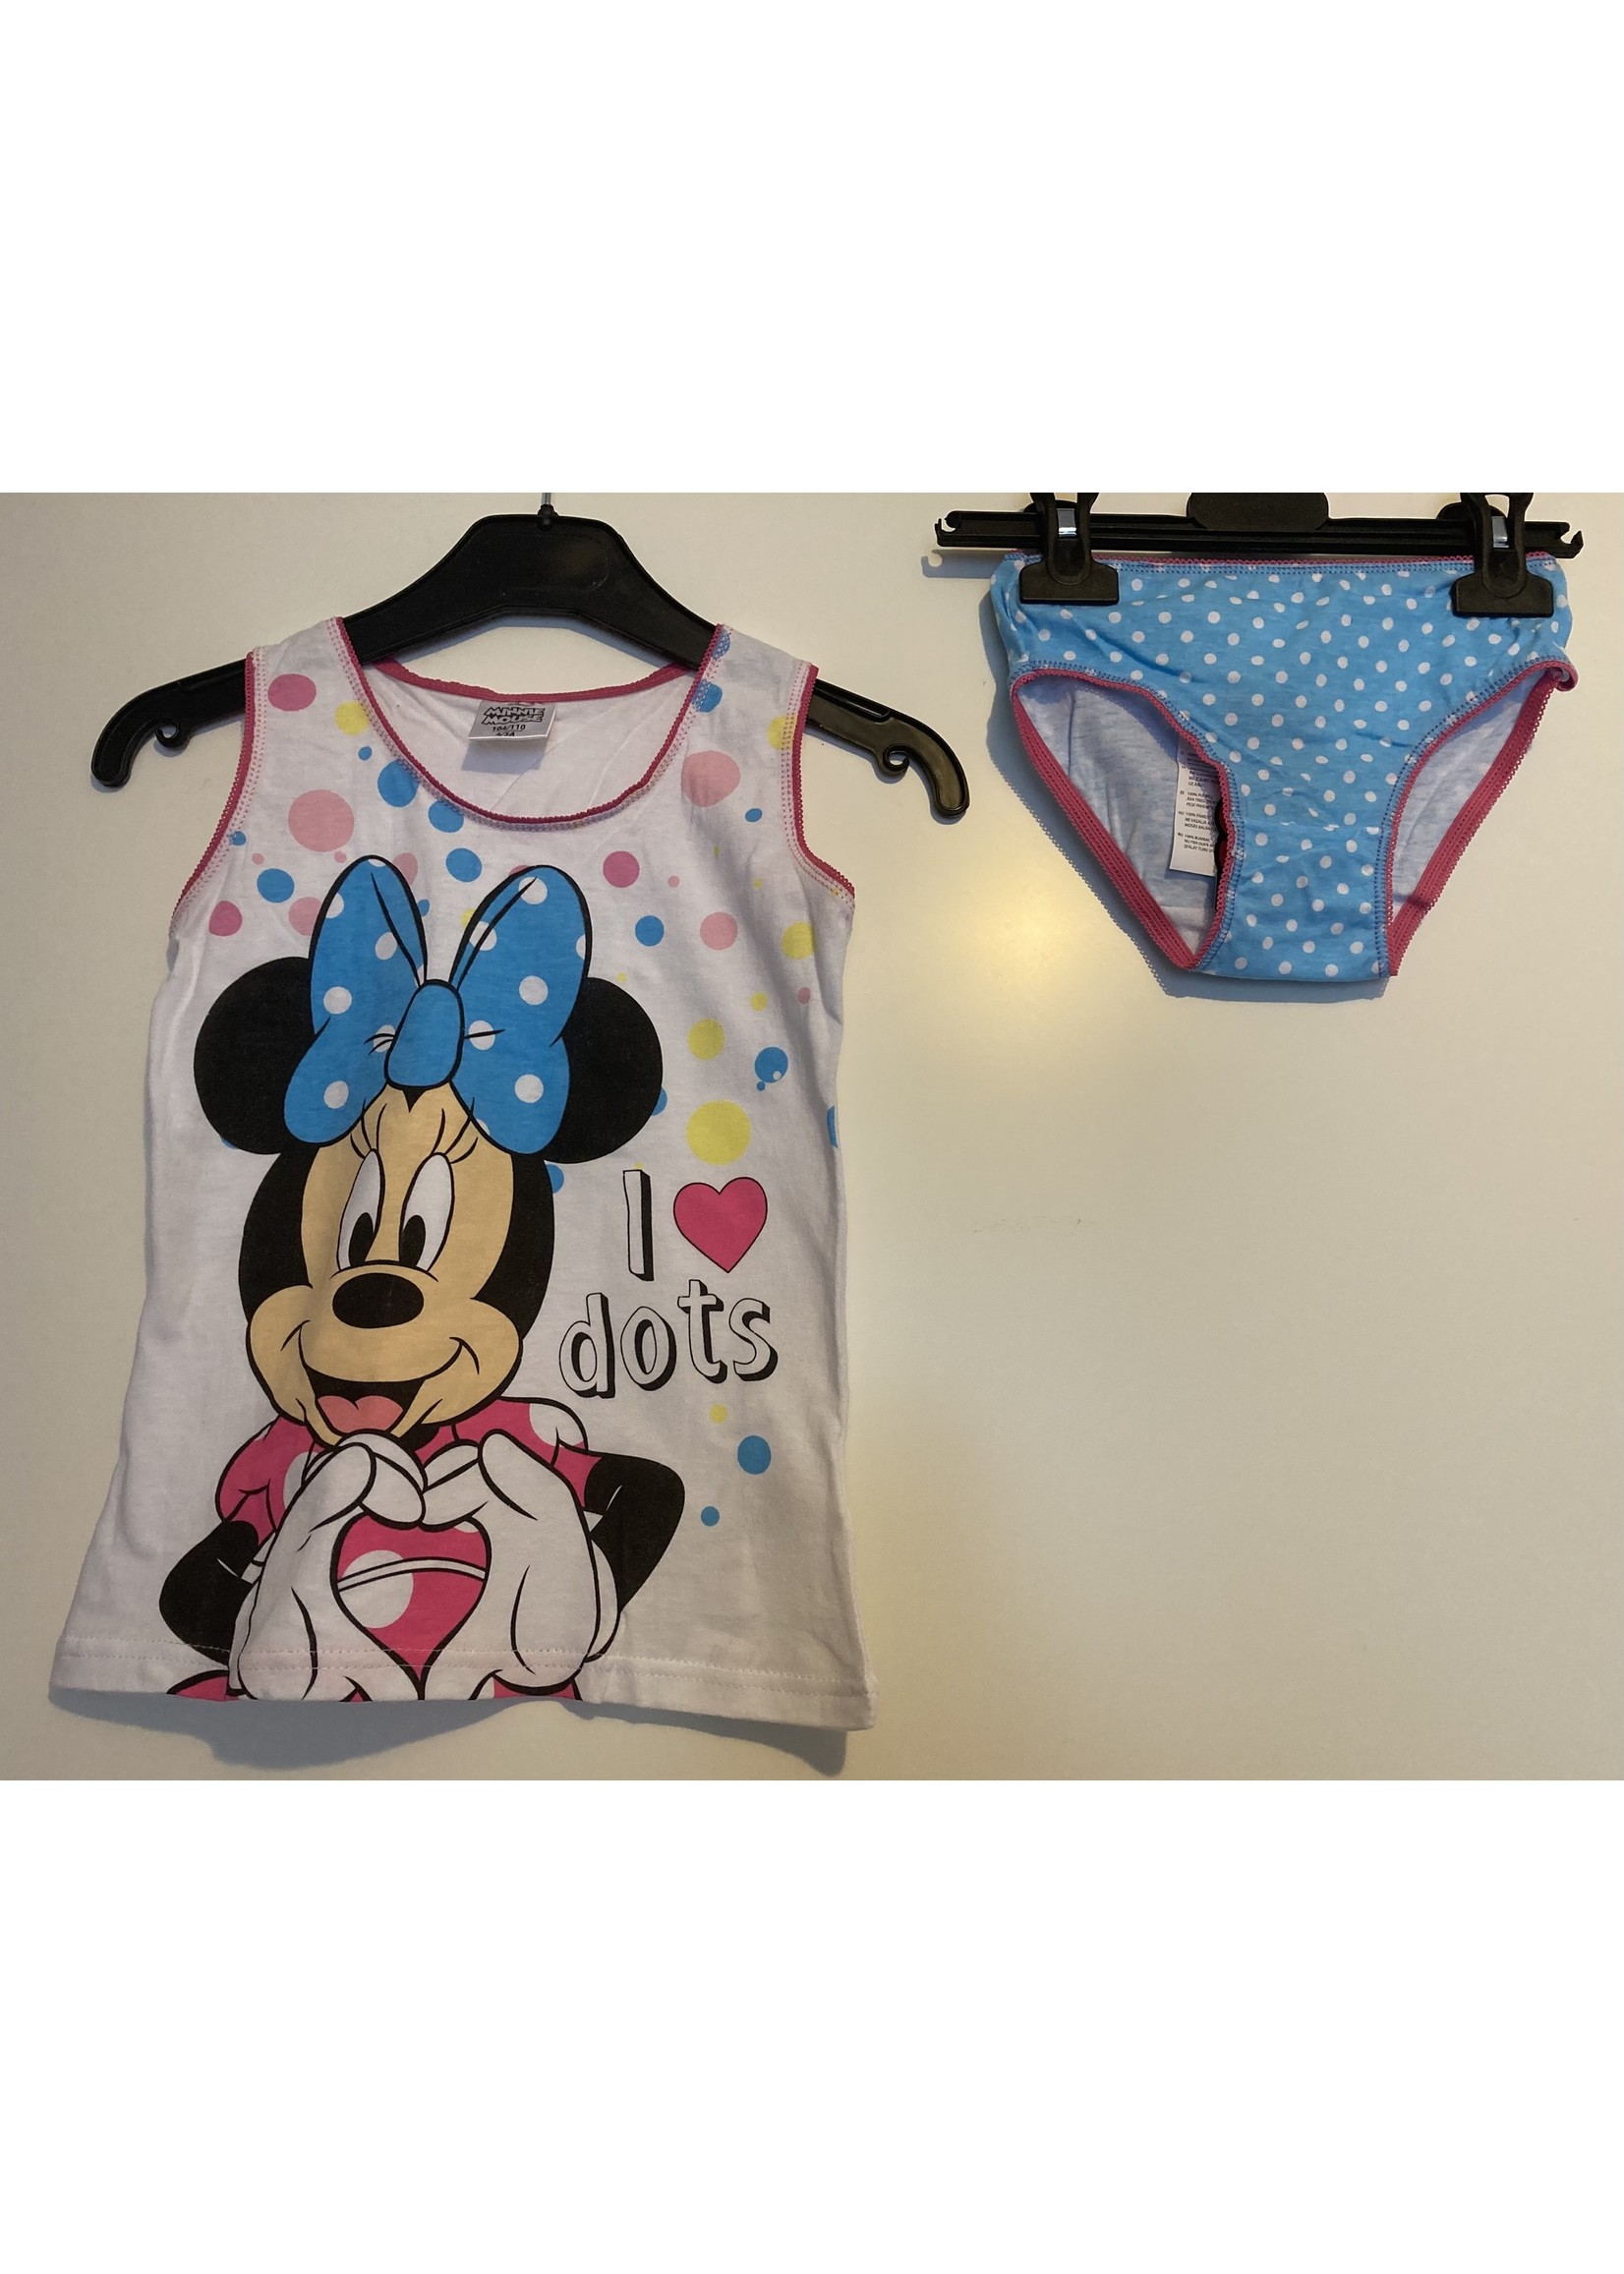 Disney Minnie Mouse underwear from Disney blue